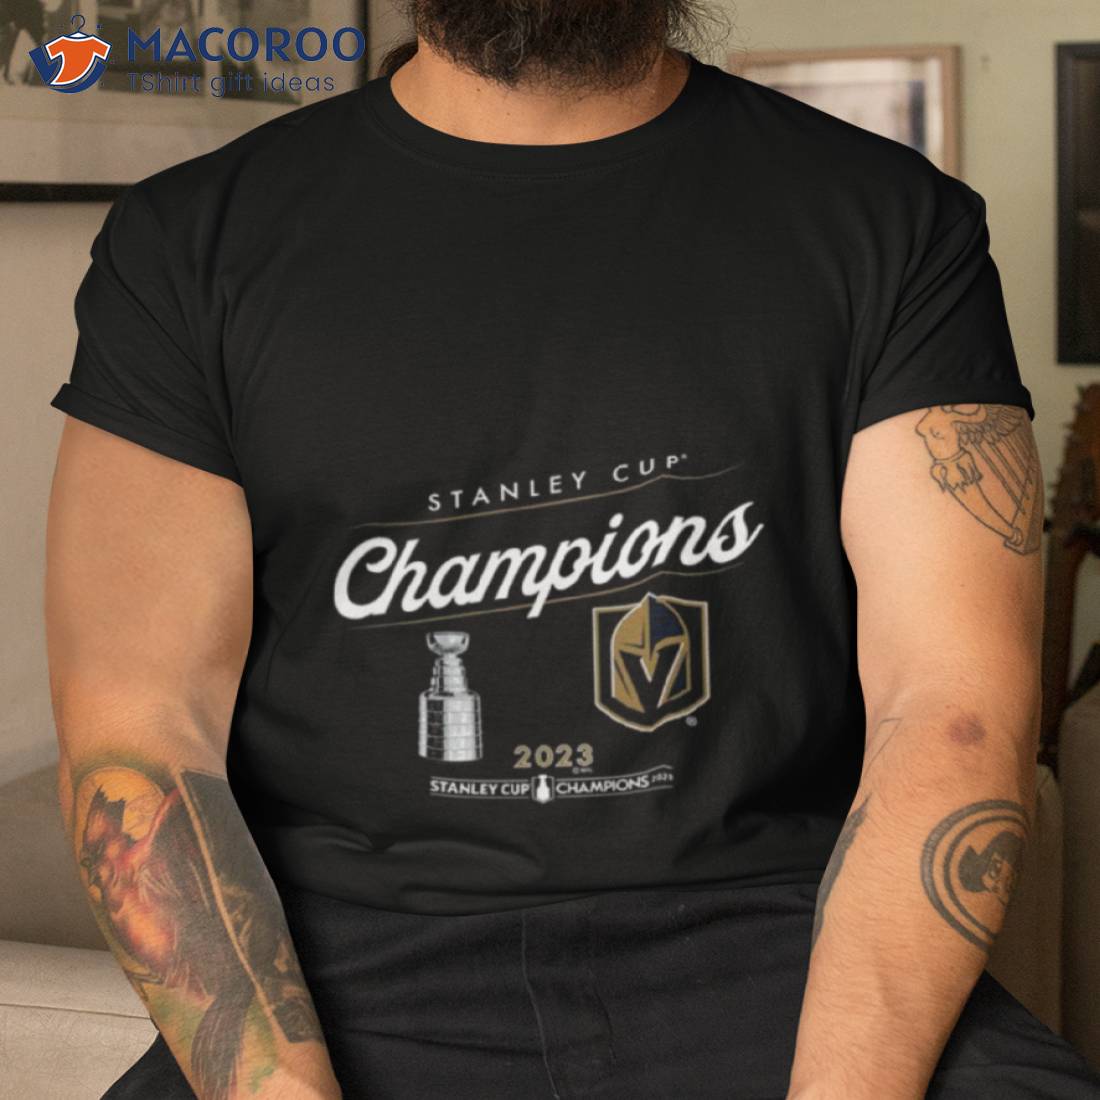 https://images.macoroo.com/wp-content/uploads/2023/06/stanley-cup-champs-2023-logo-vegas-golden-knights-shirt-tshirt.jpg